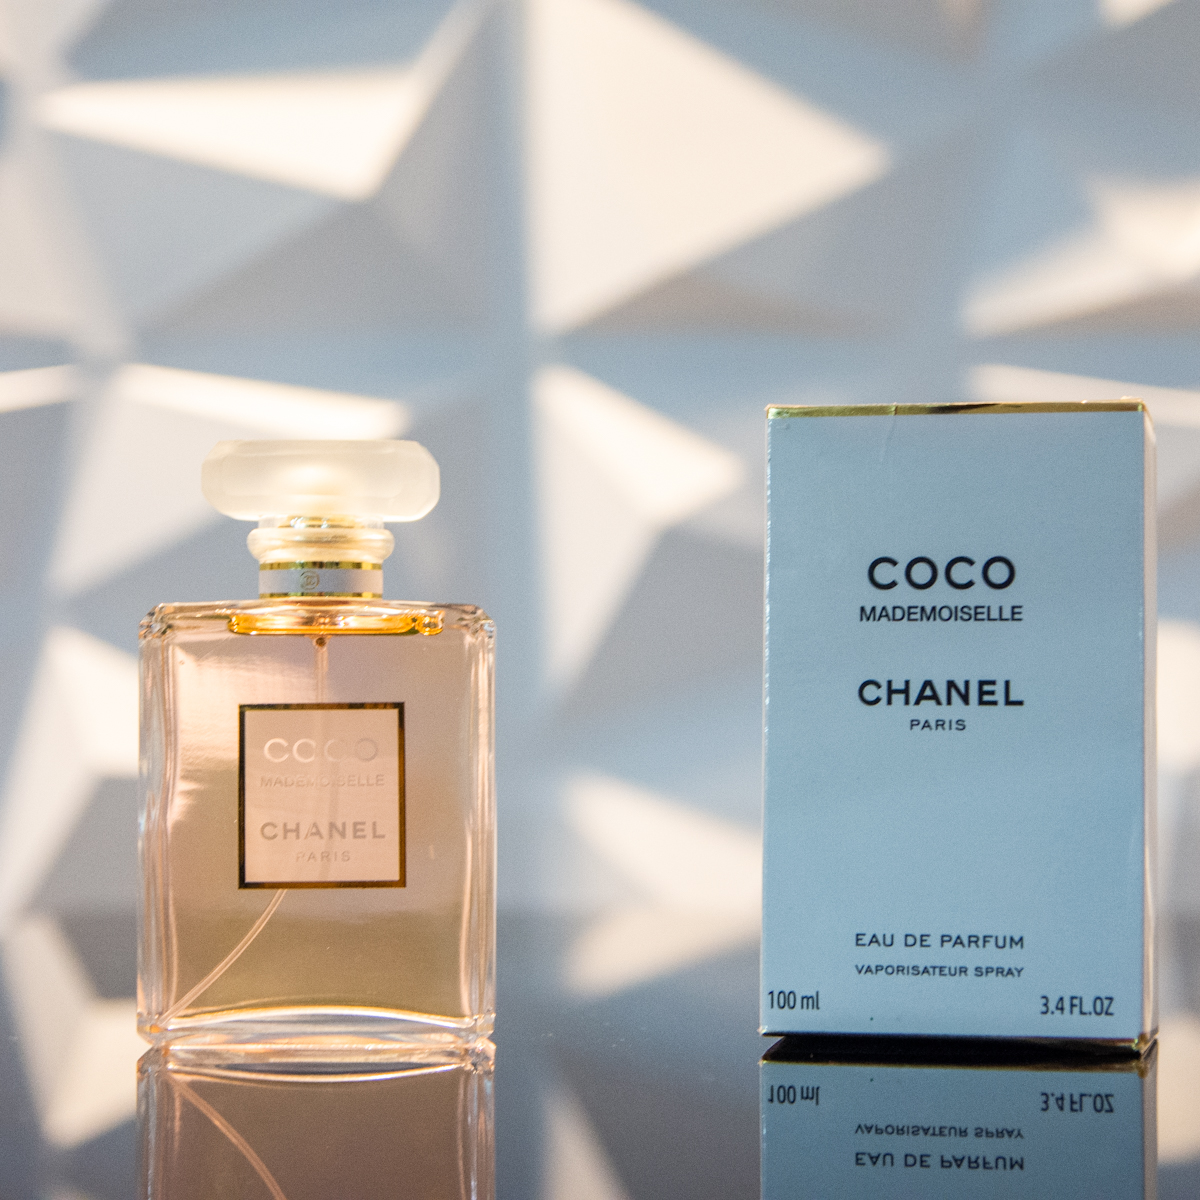 Perfume Coco Chanel Mademoiselle Para Mujer (Replica con Fragancia  Importada) - Luegopago